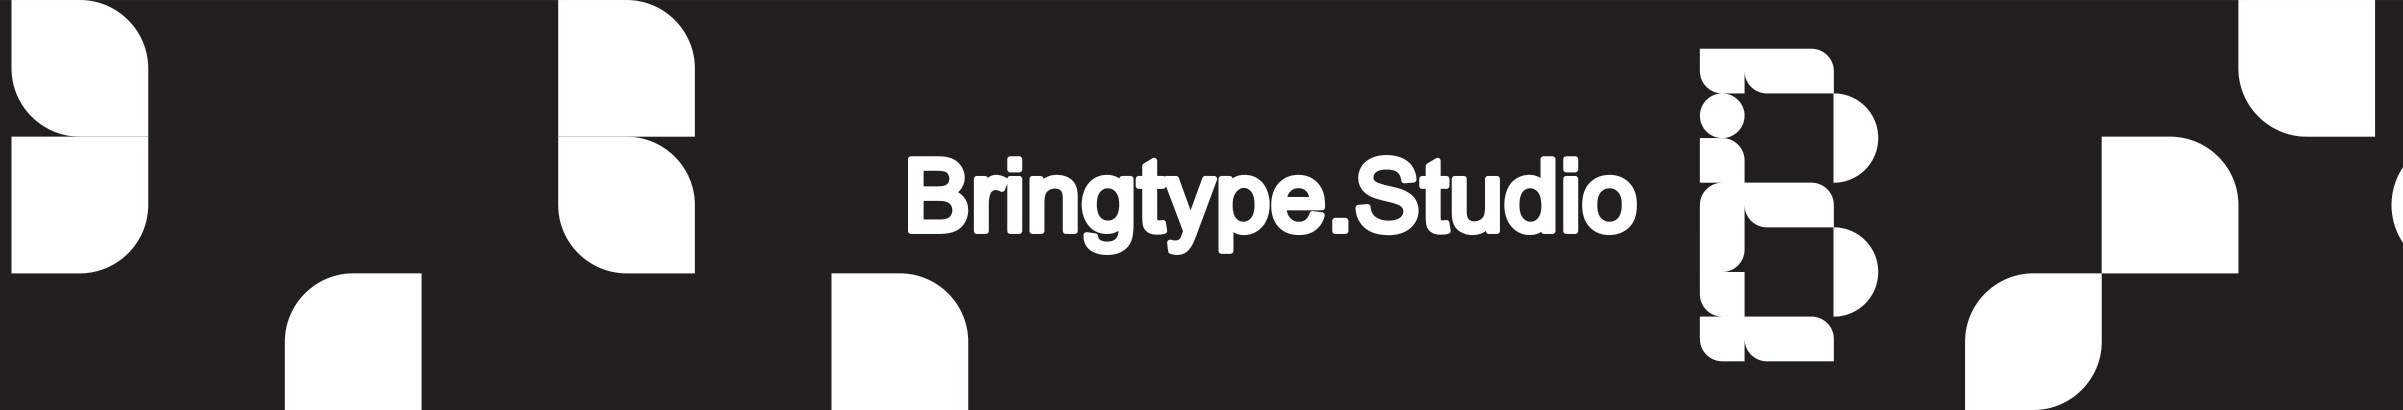 Bringtype Studio's profile banner